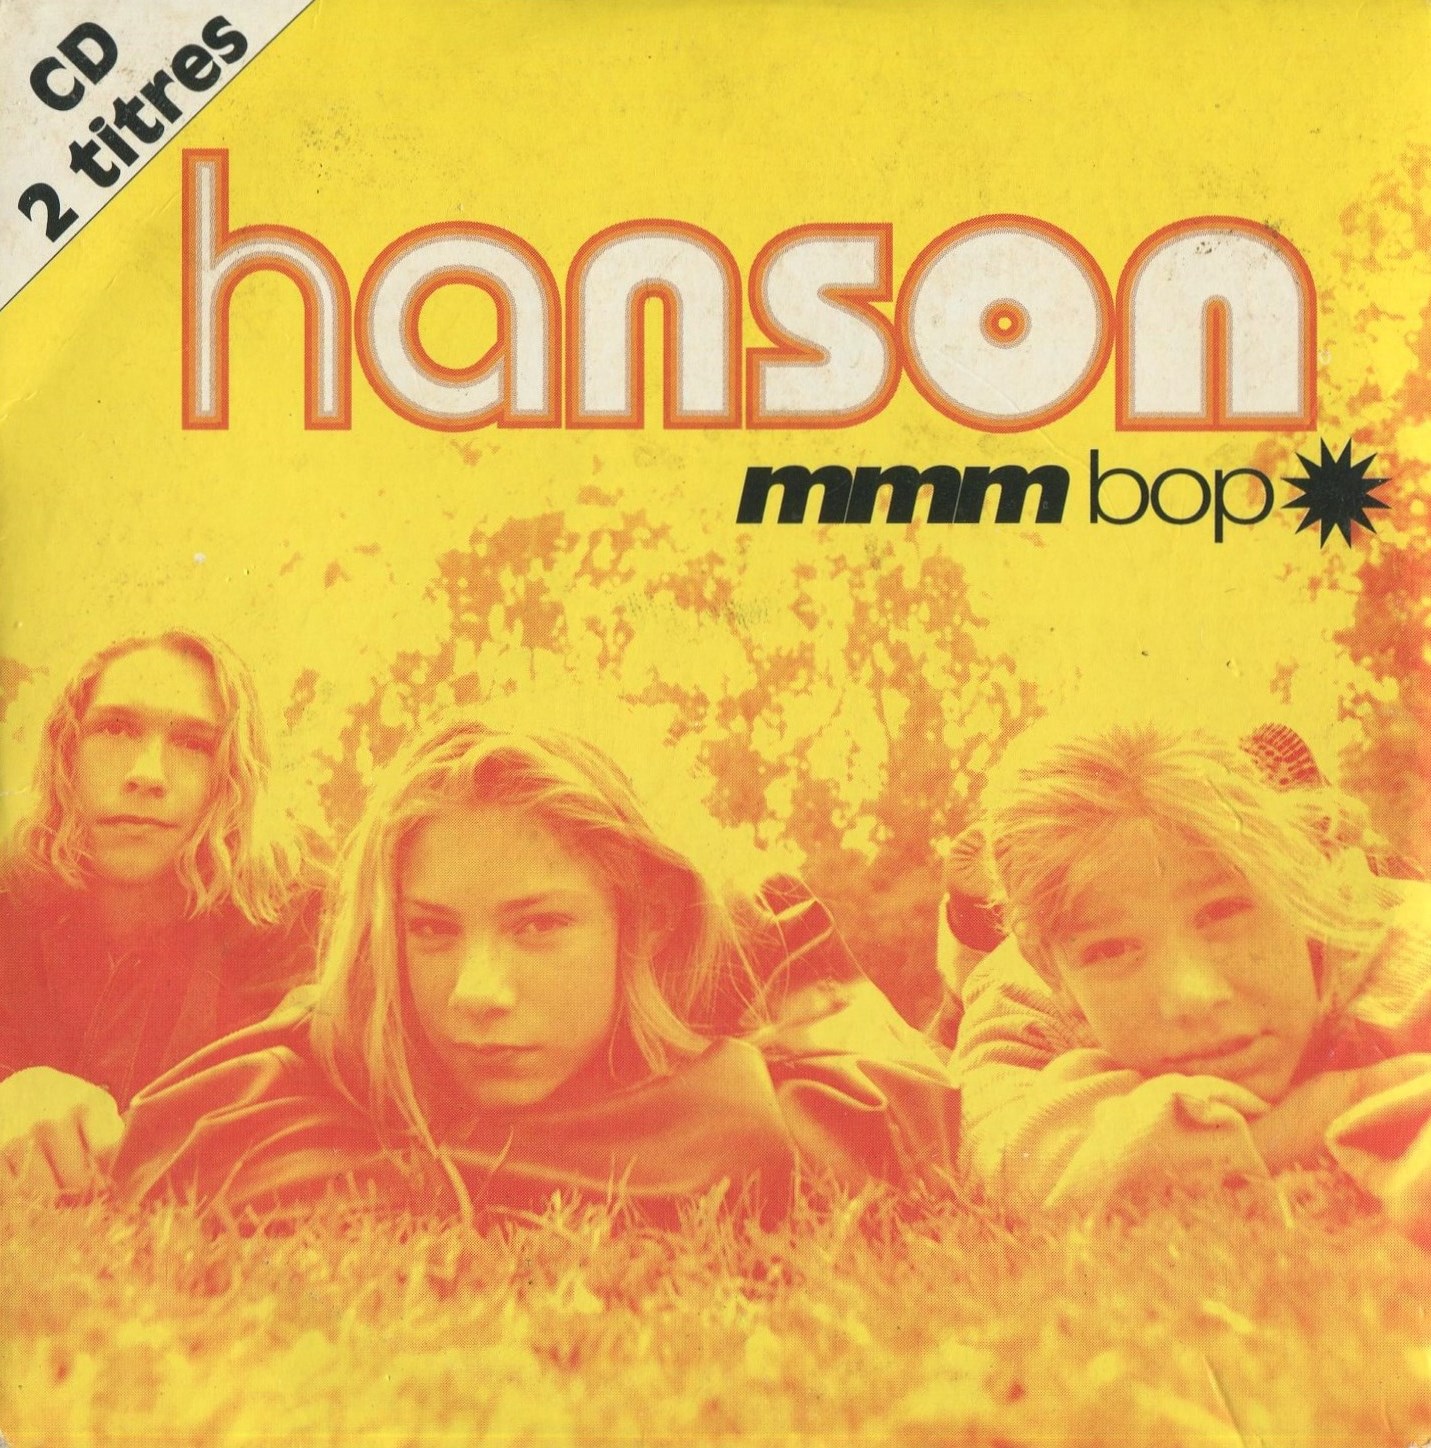 Hanson - Mmm bop